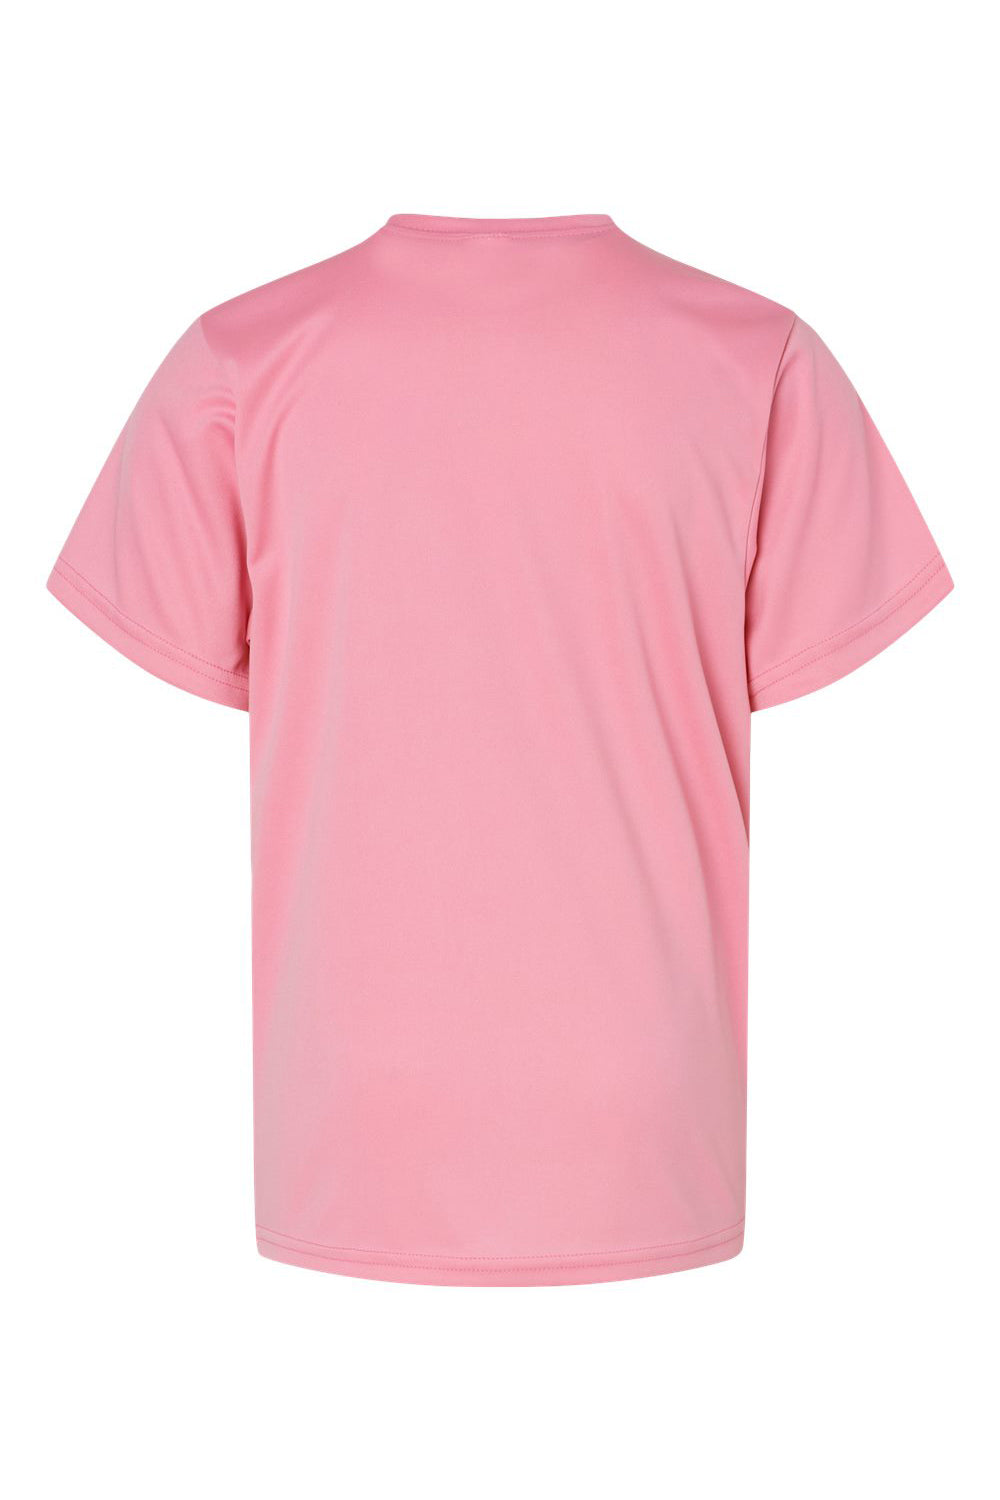 C2 Sport 5200 Youth Performance Moisture Wicking Short Sleeve Crewneck T-Shirt Pink Flat Back